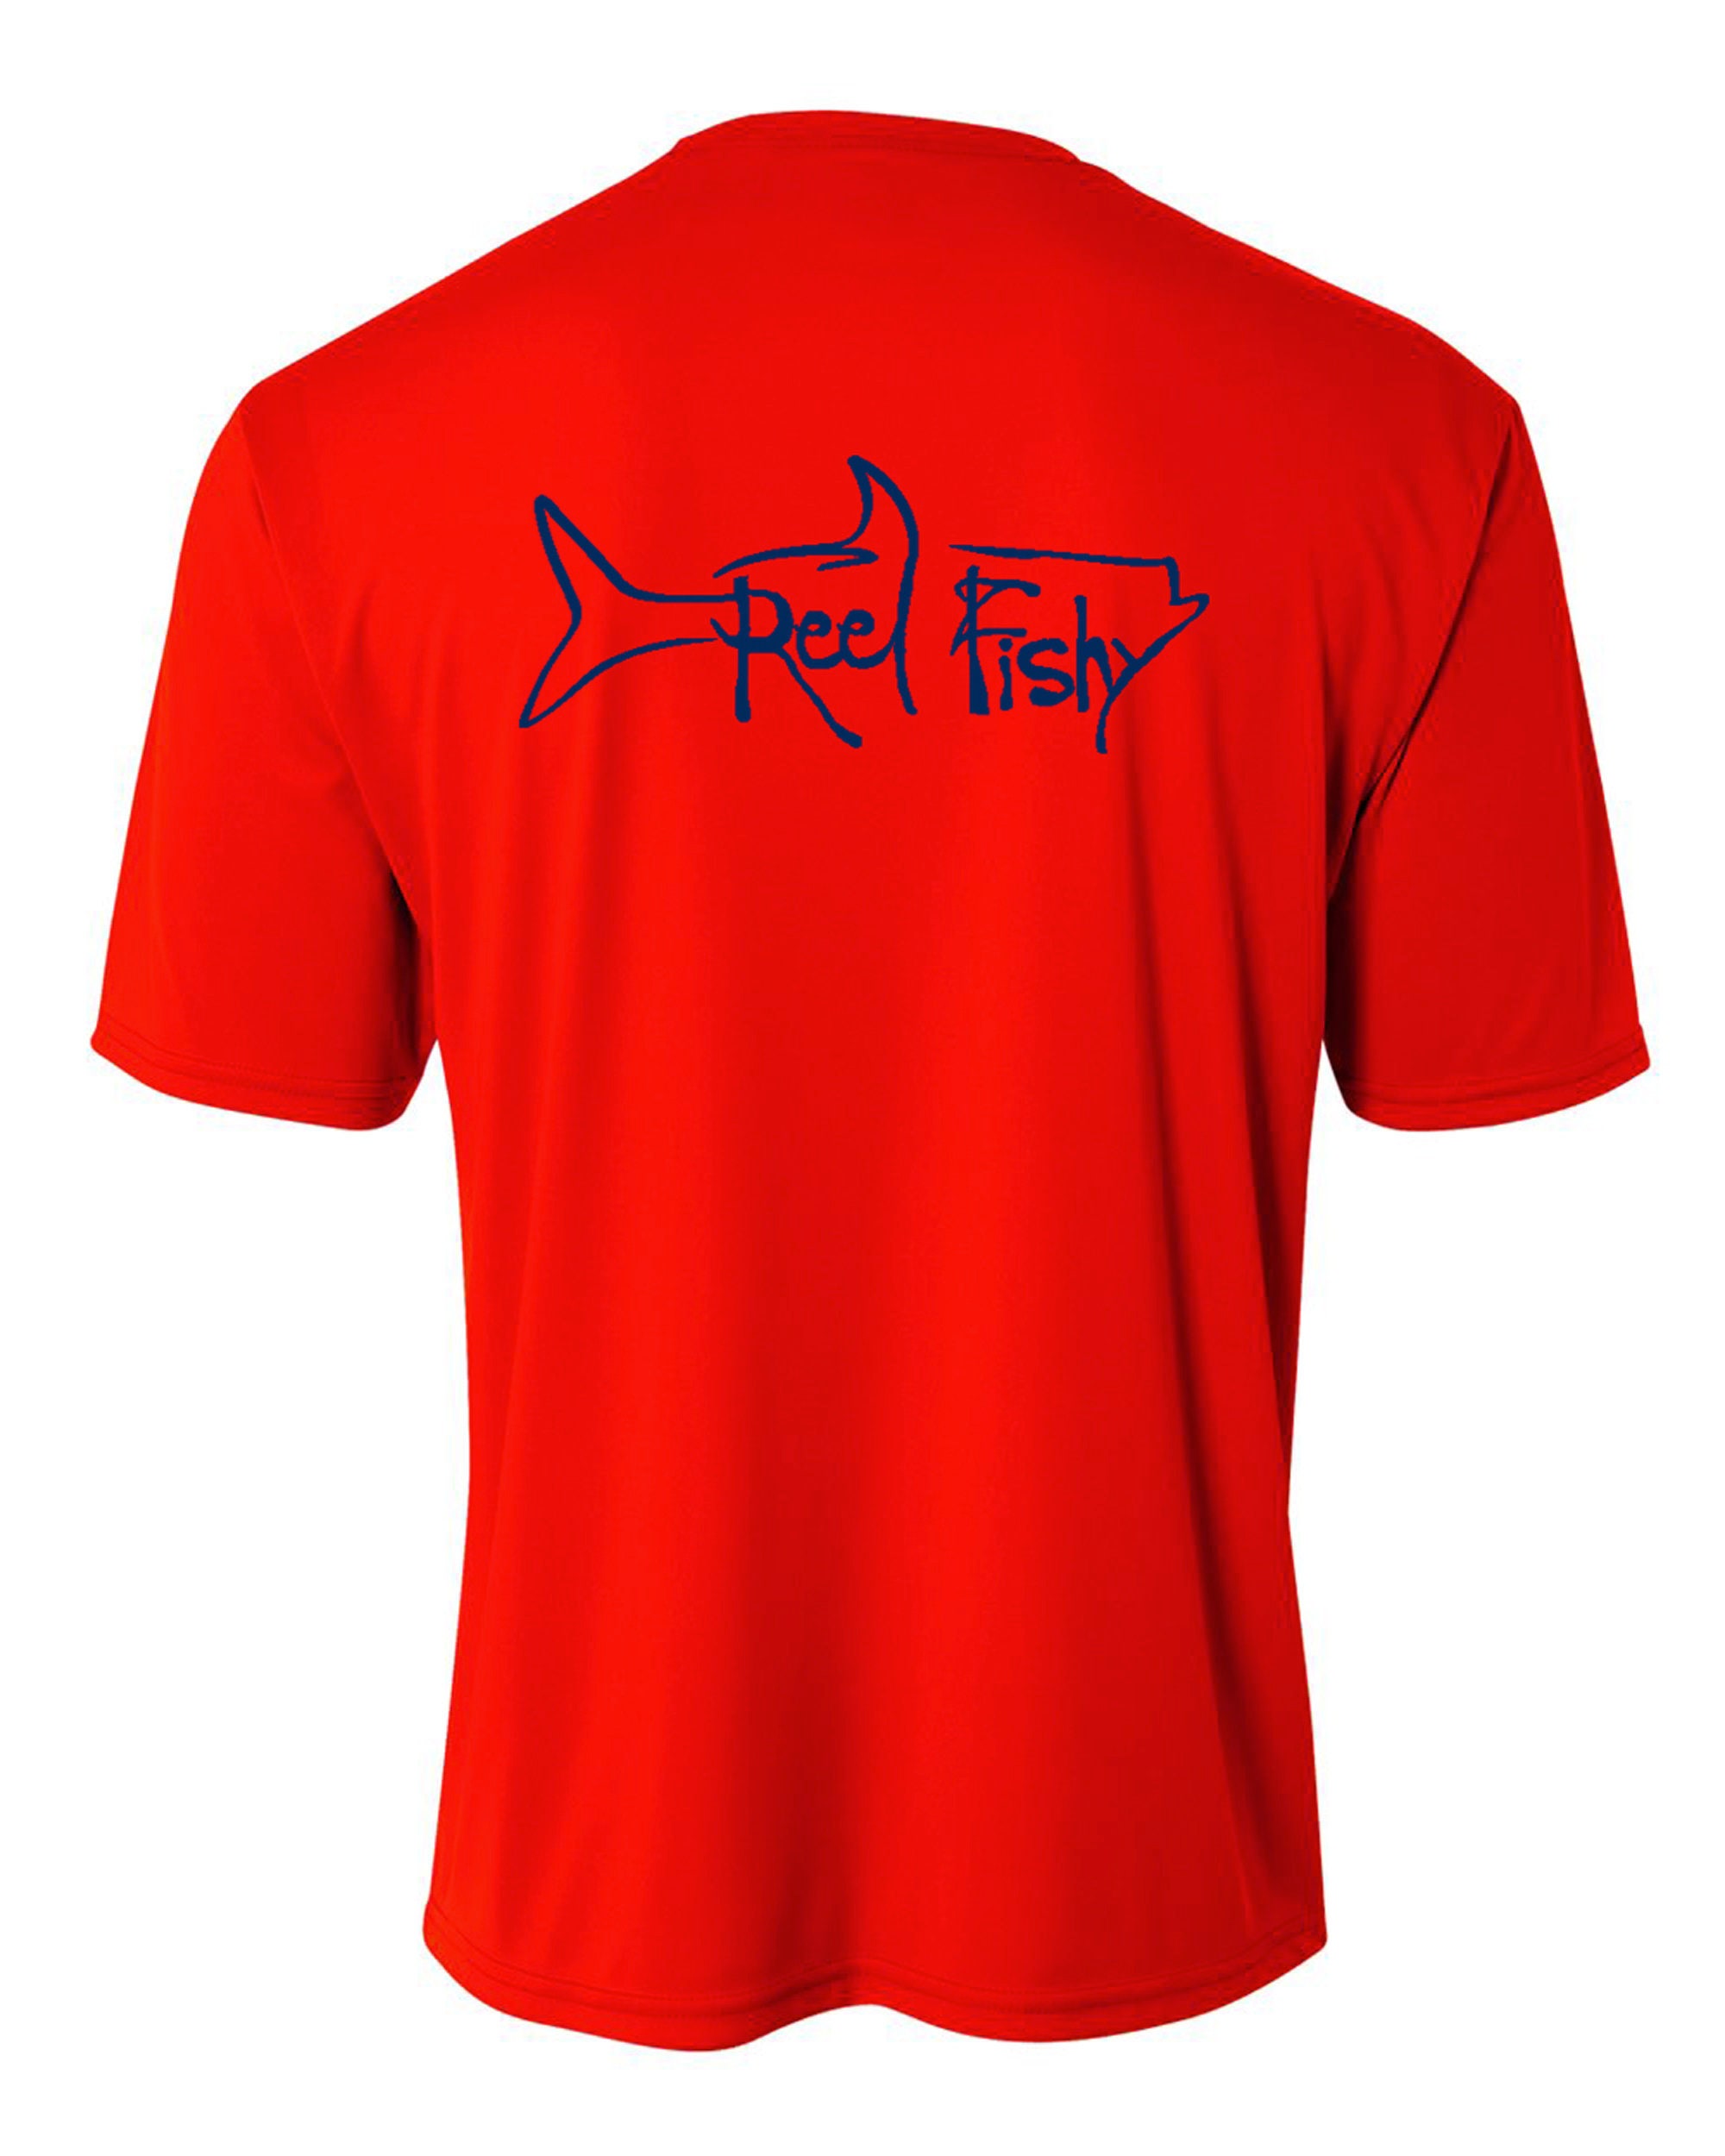 Kids Fishing Shirts, Youth Fishing Shirts, Performance Fishing